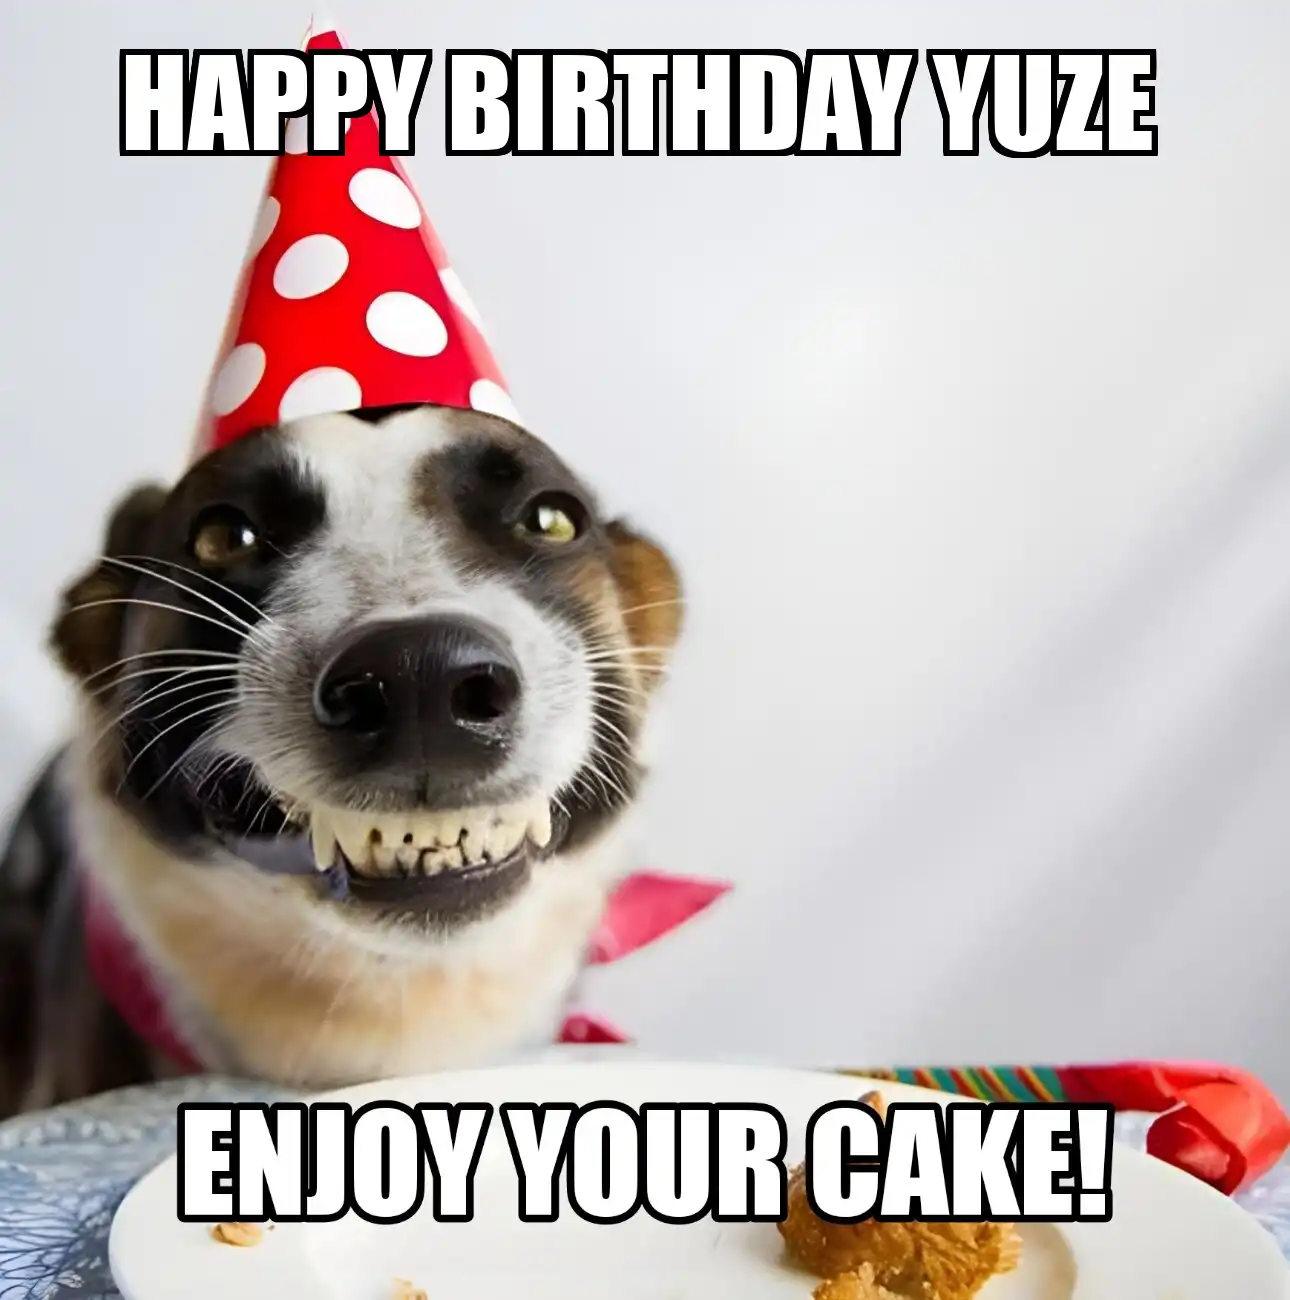 Happy Birthday Yuze Enjoy Your Cake Dog Meme